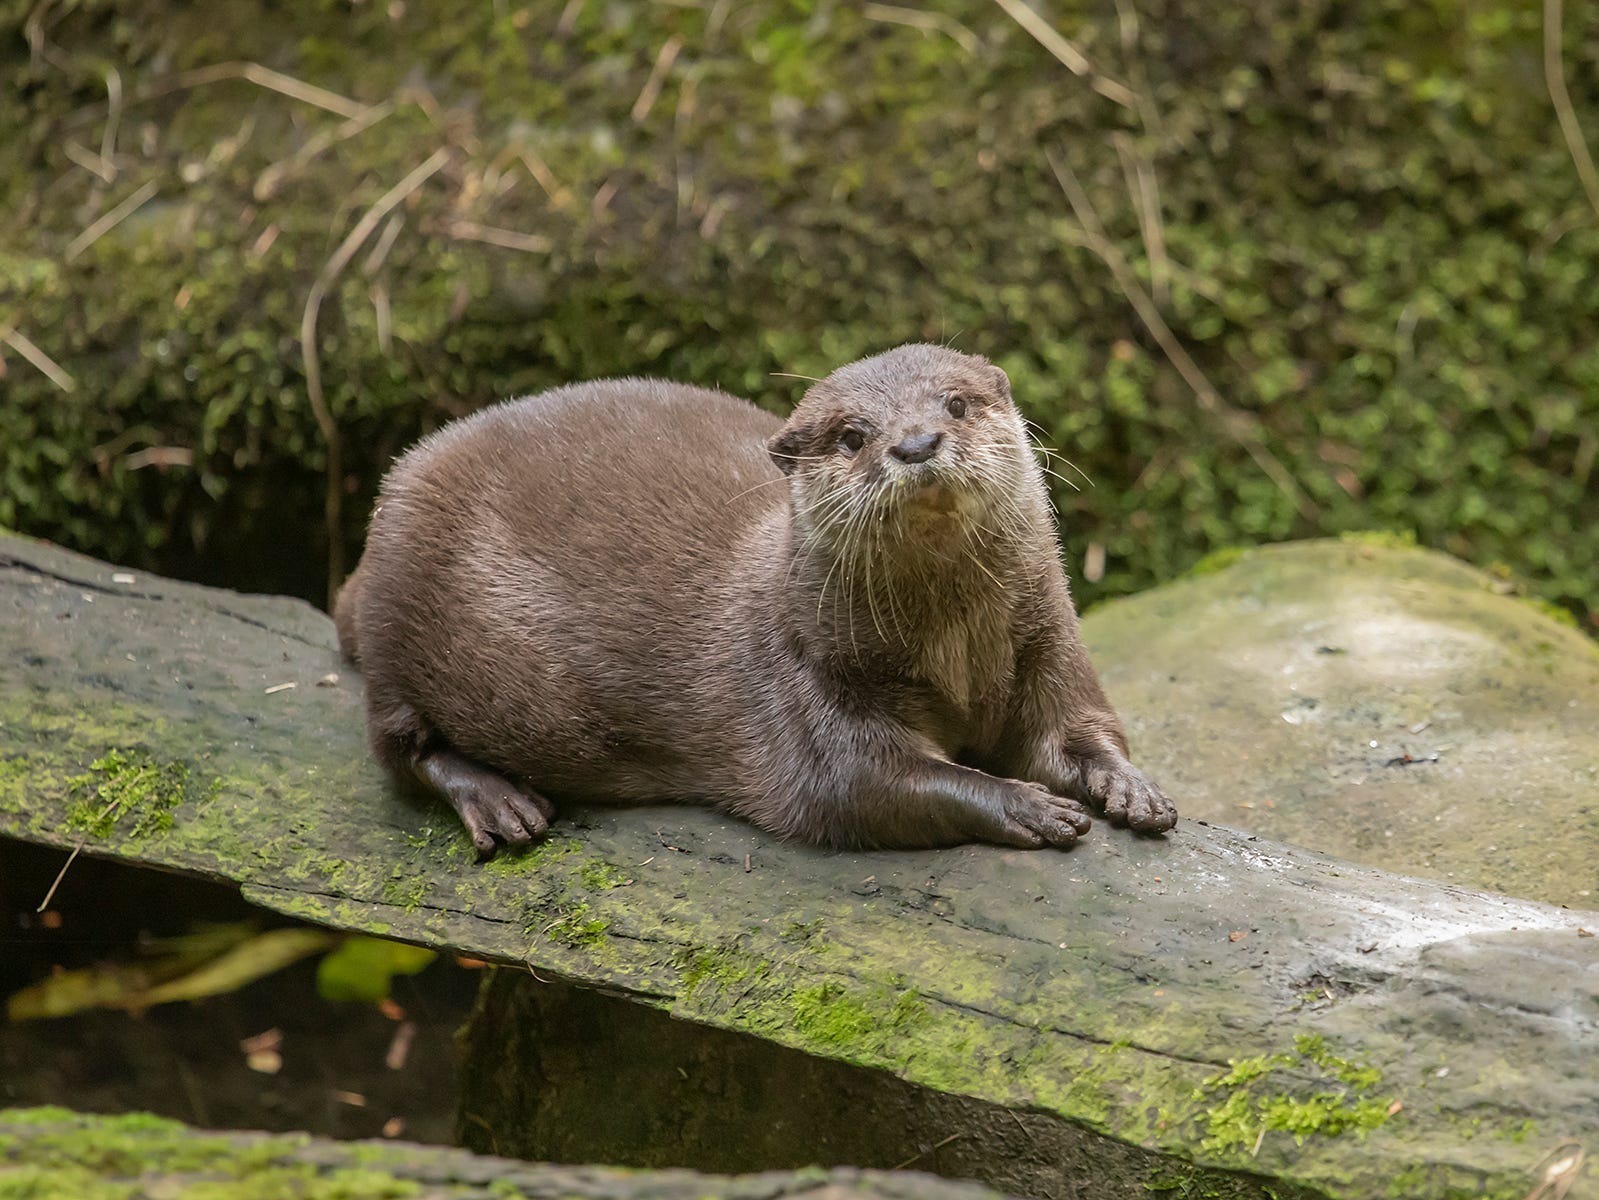 Harris is an Asian short-clawed otter.